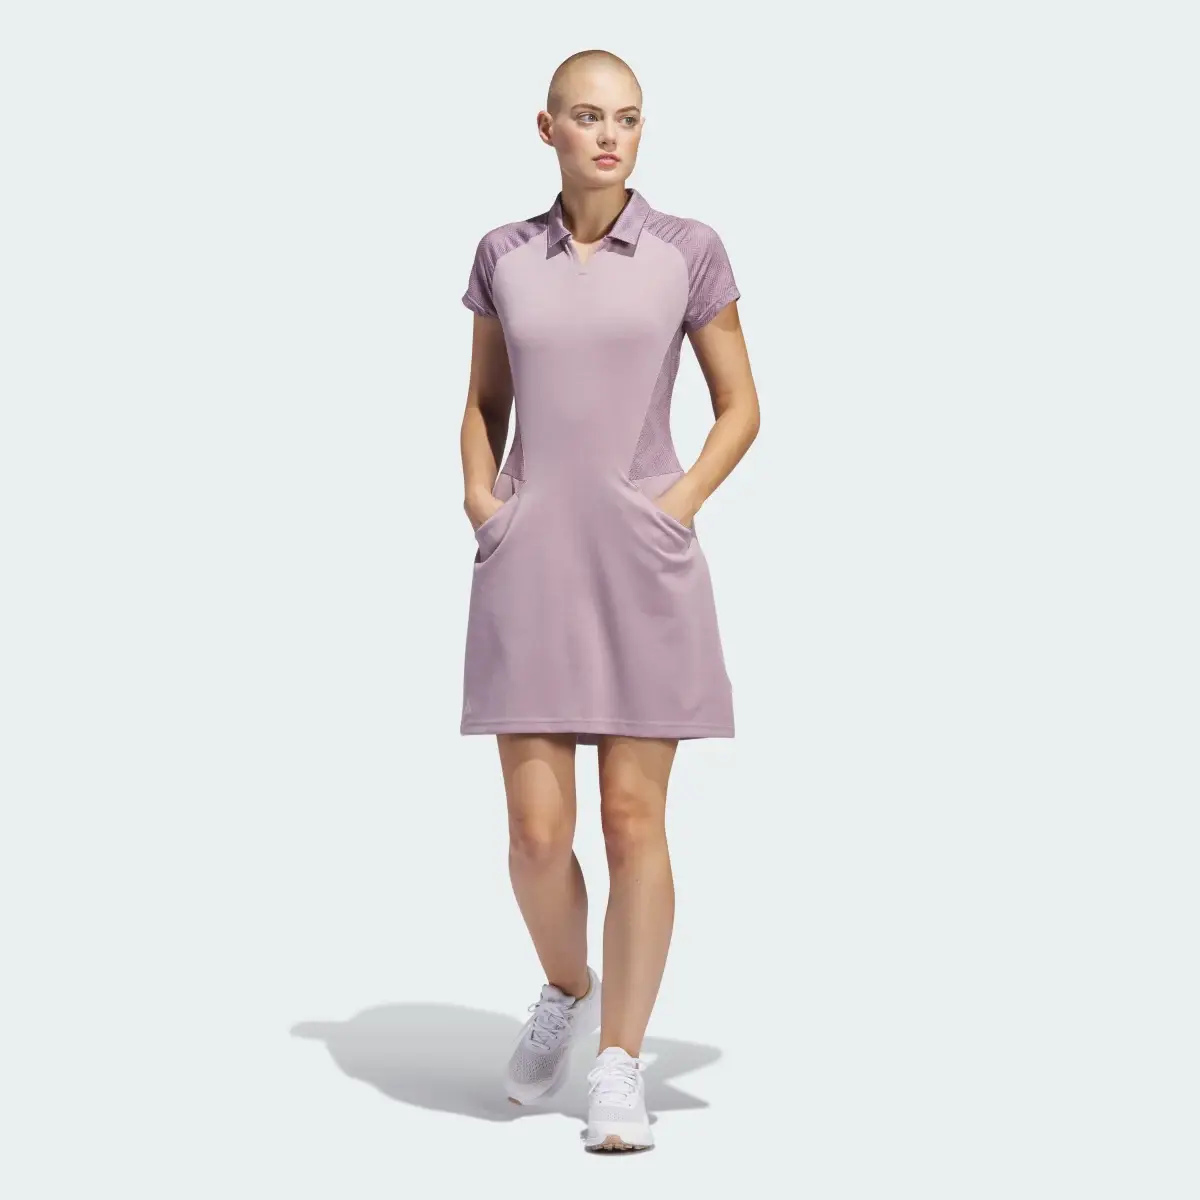 Adidas Women's Ultimate365 Short Sleeve Dress. 2